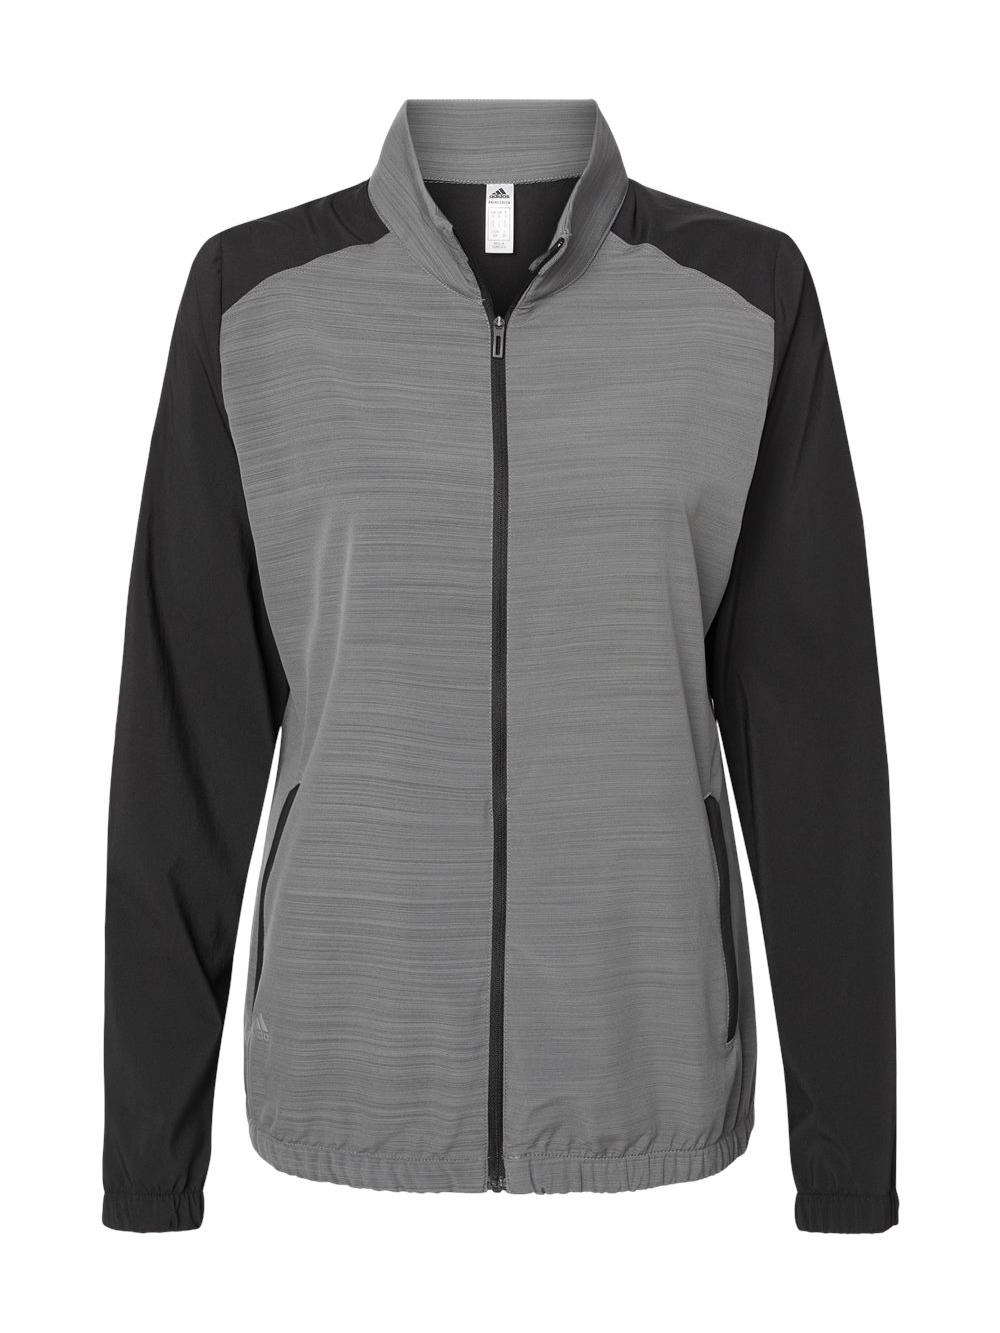 Adidas - Women's Heather Block Full-Zip Wind Jacket - A547 - Black/ Black Heather - image 1 of 2